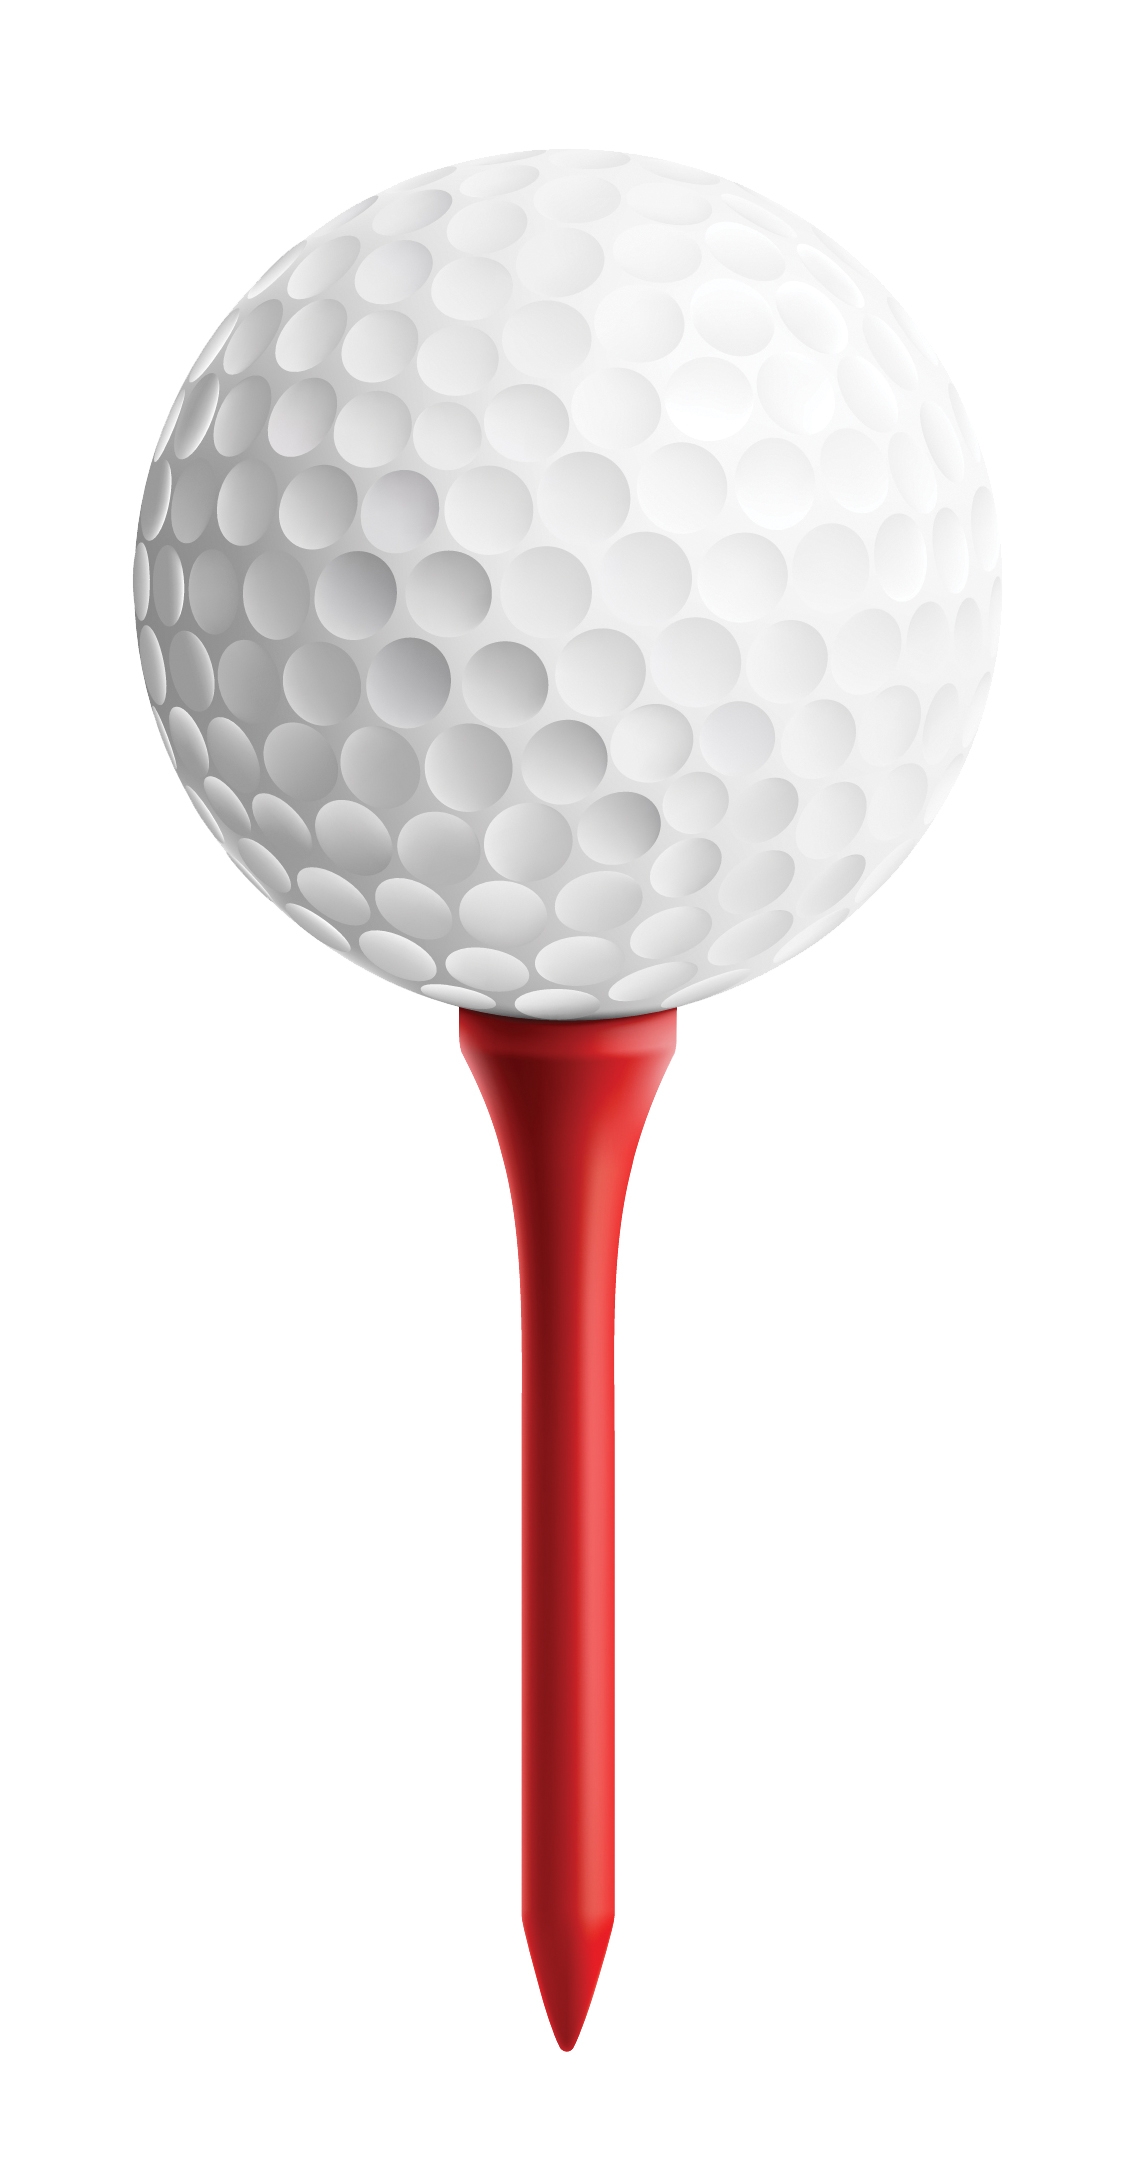 Free Clipart Golf Ball On Tee 